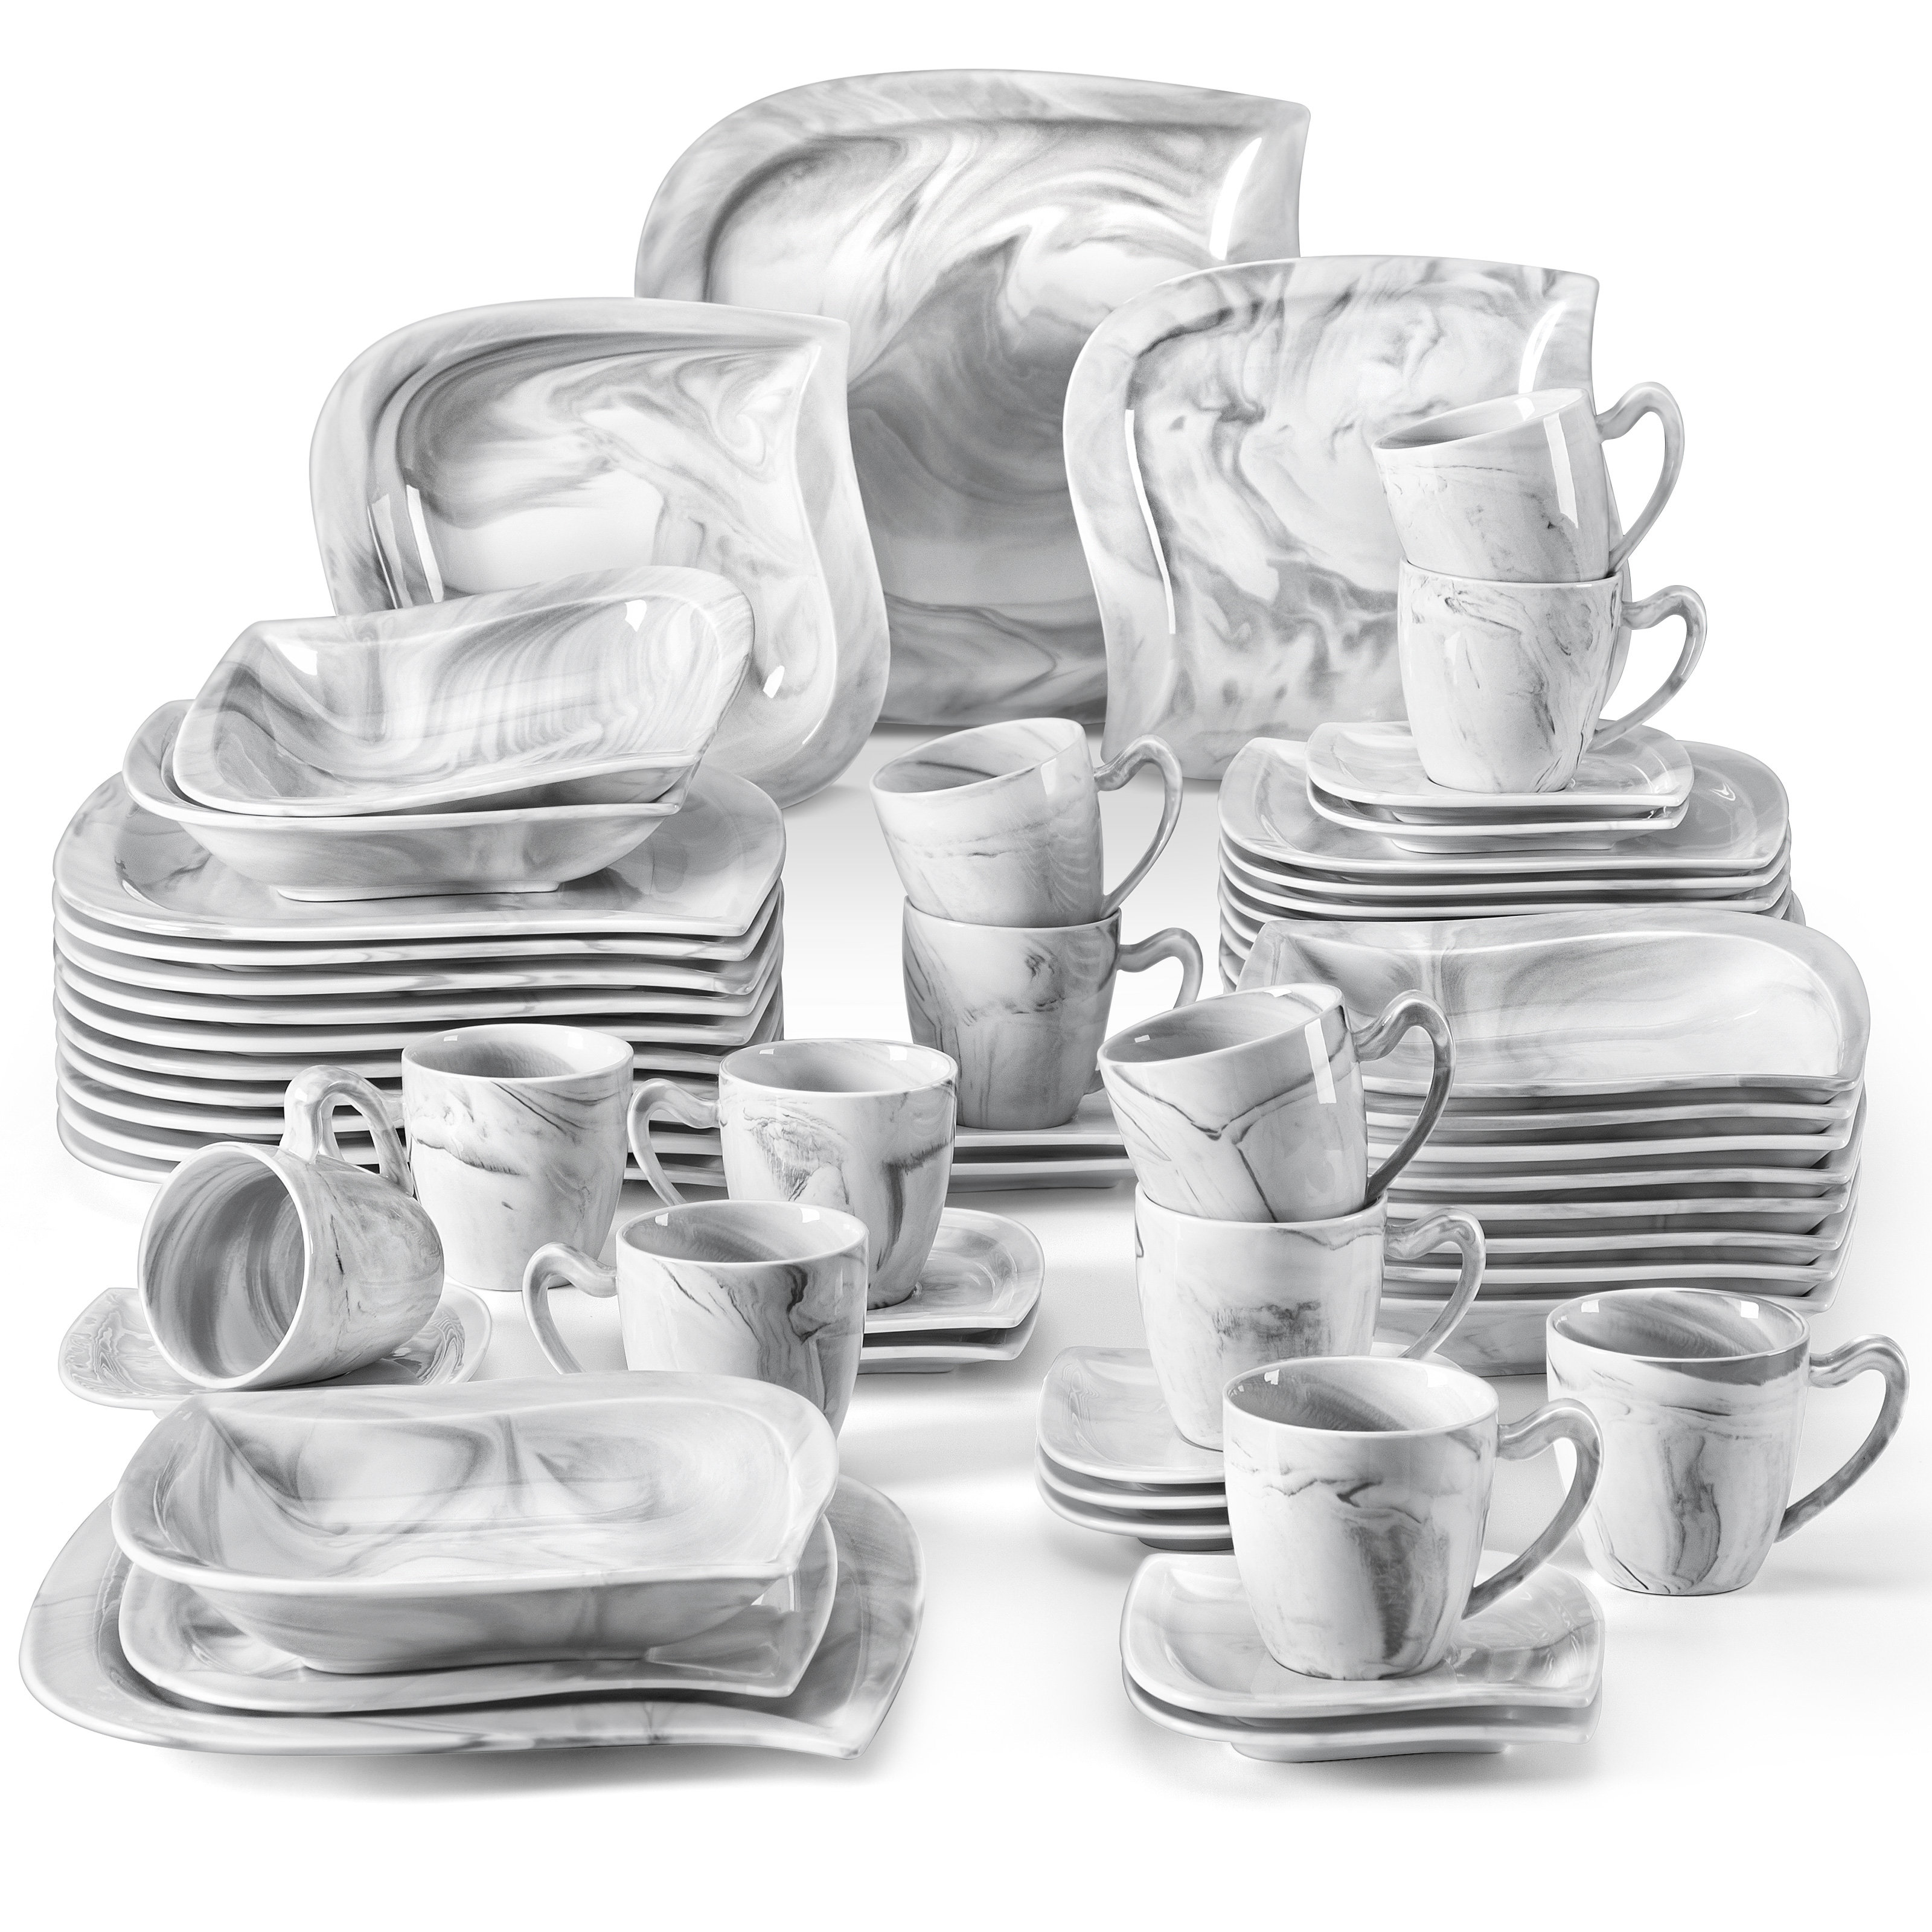 MALACASA, Series Blance, 2-Piece Porcelain Rectangular Plate Dinnerware  Set, Ivory White Dinner Set, (11,13.25)